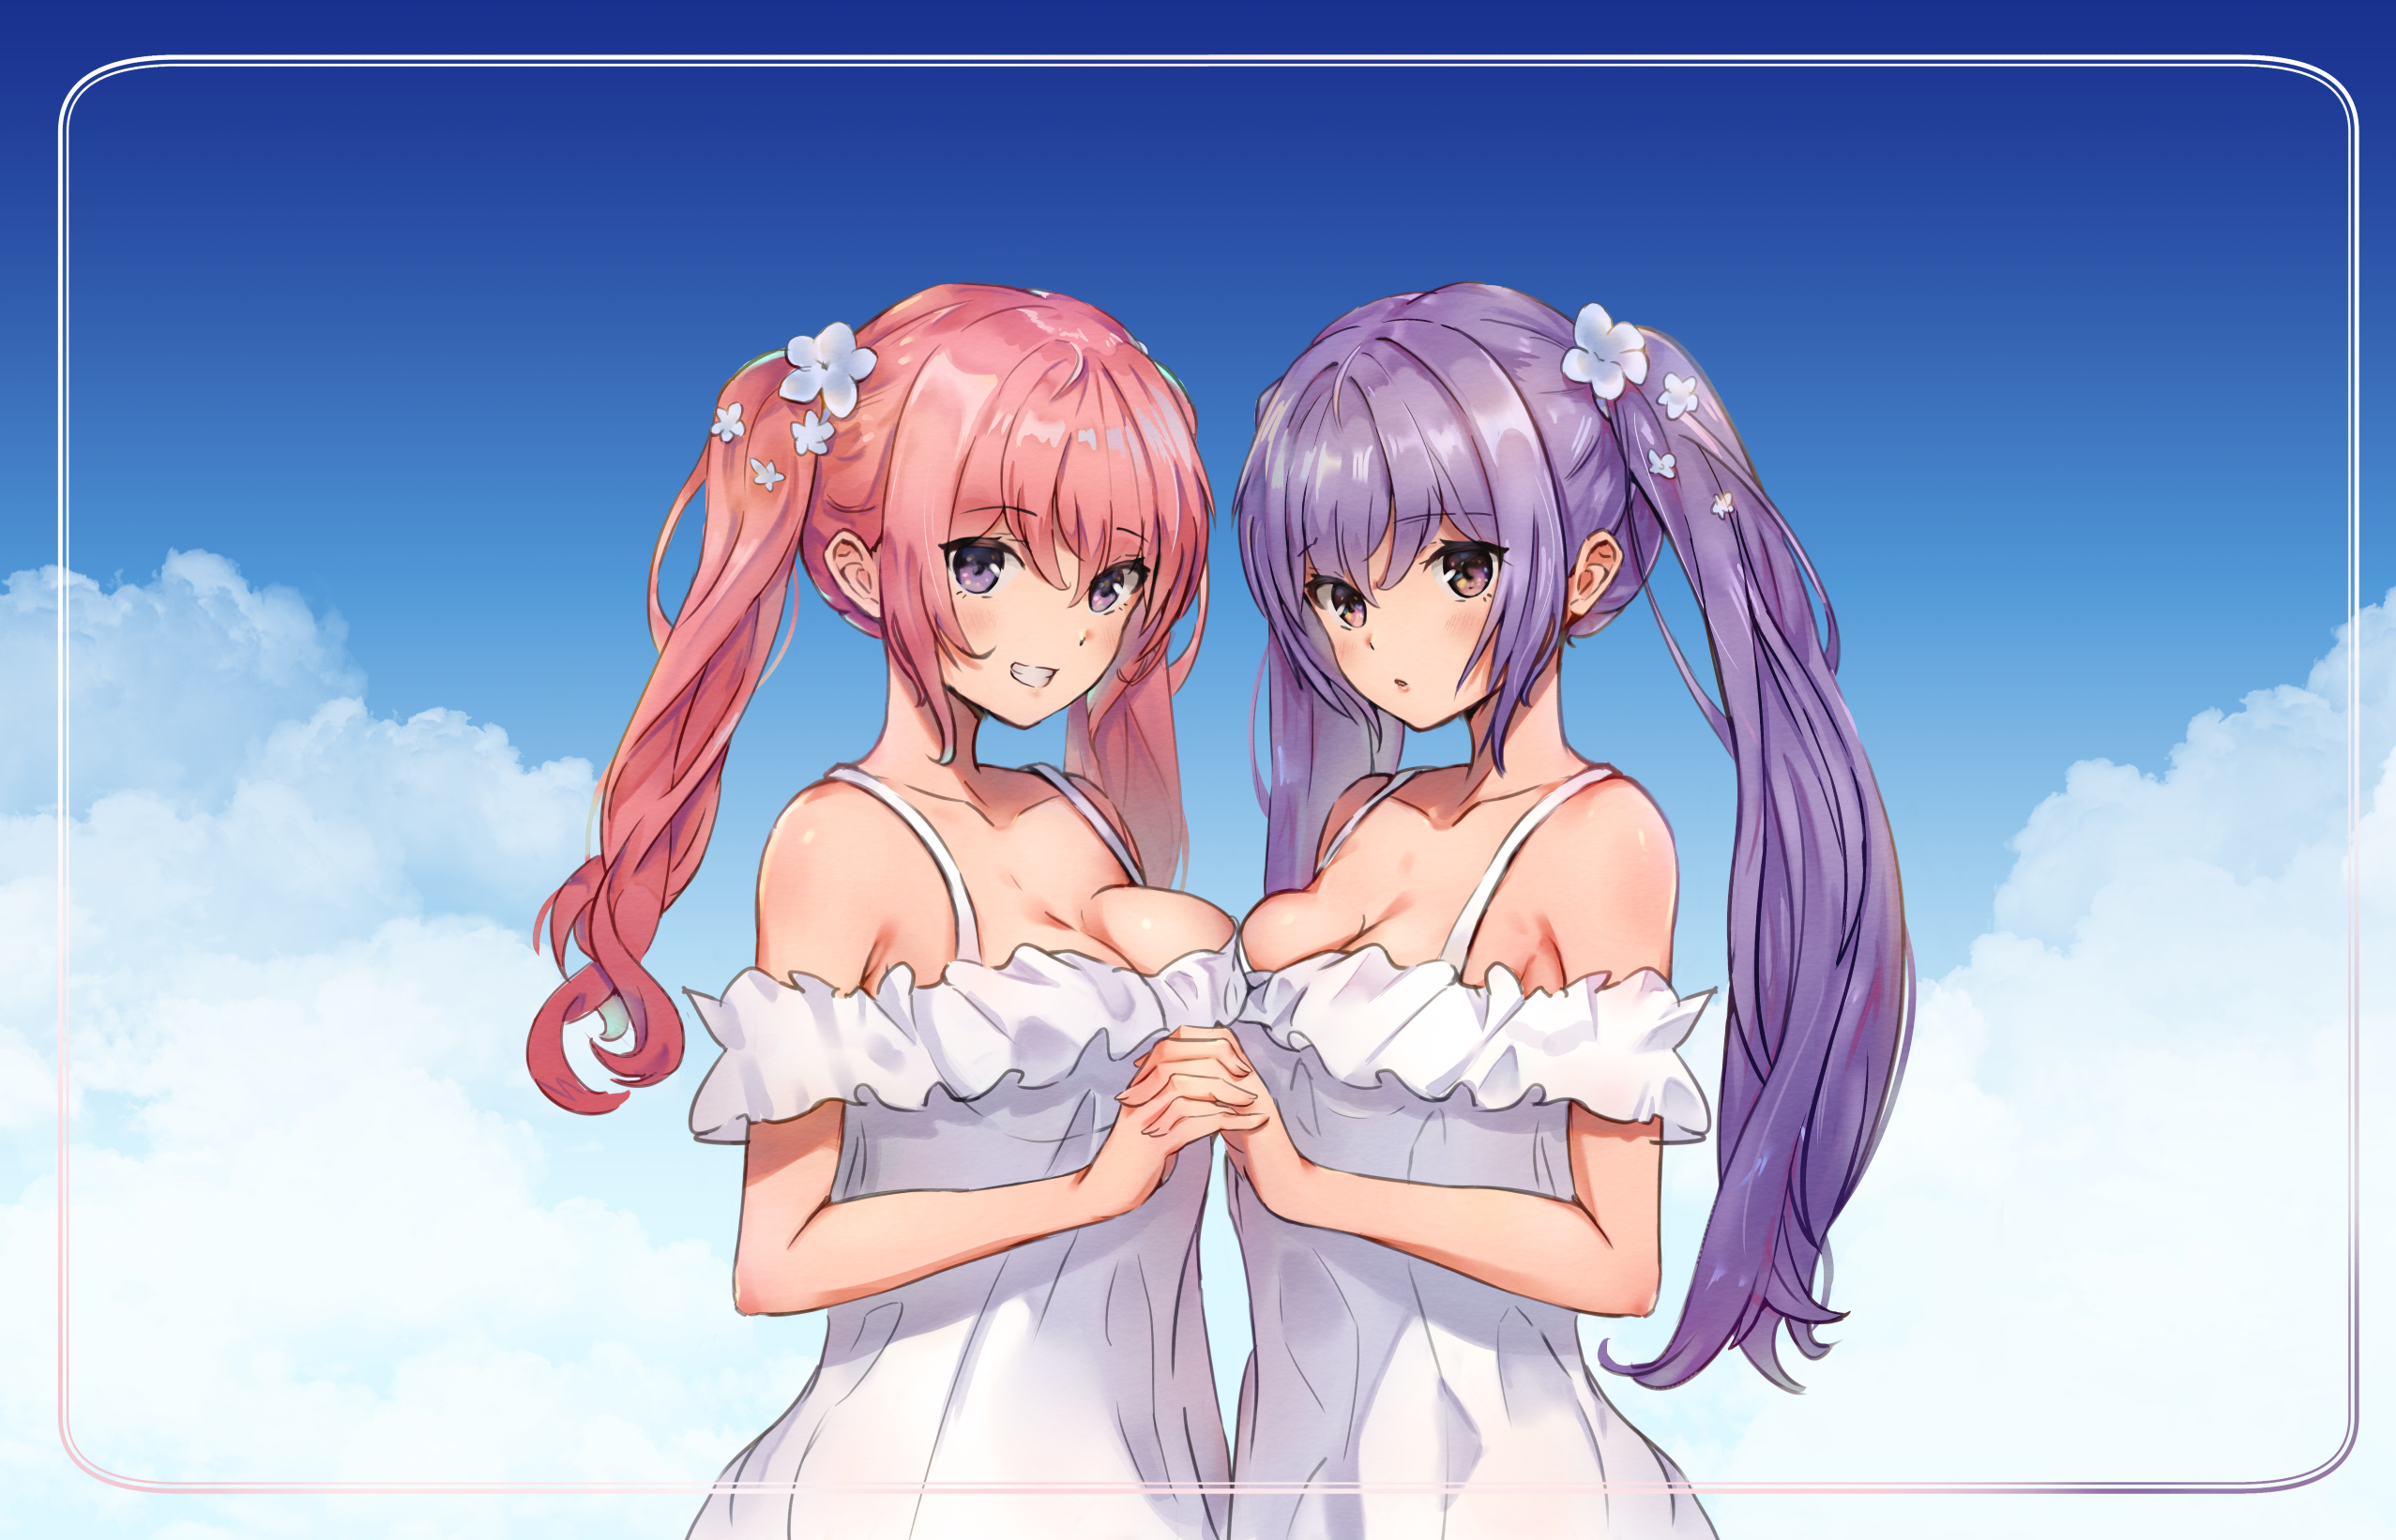 Anime Anime Girls Twins Original Characters Artwork Digital Art Fan Art 2554x1642